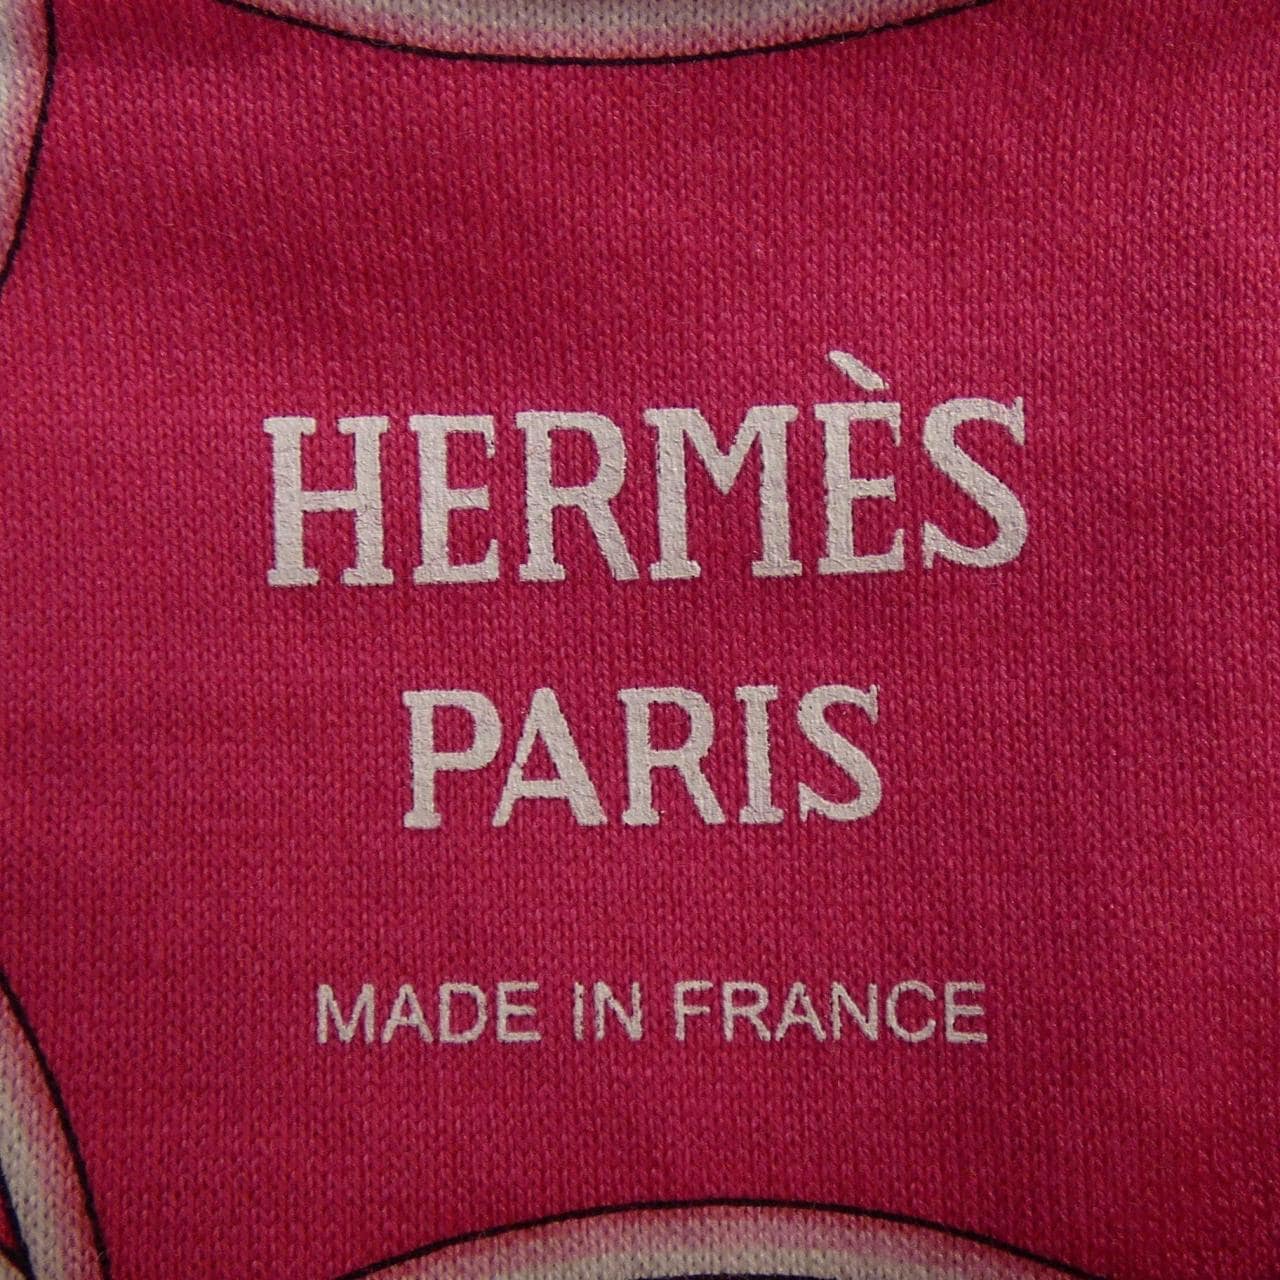 HERMES cut dress